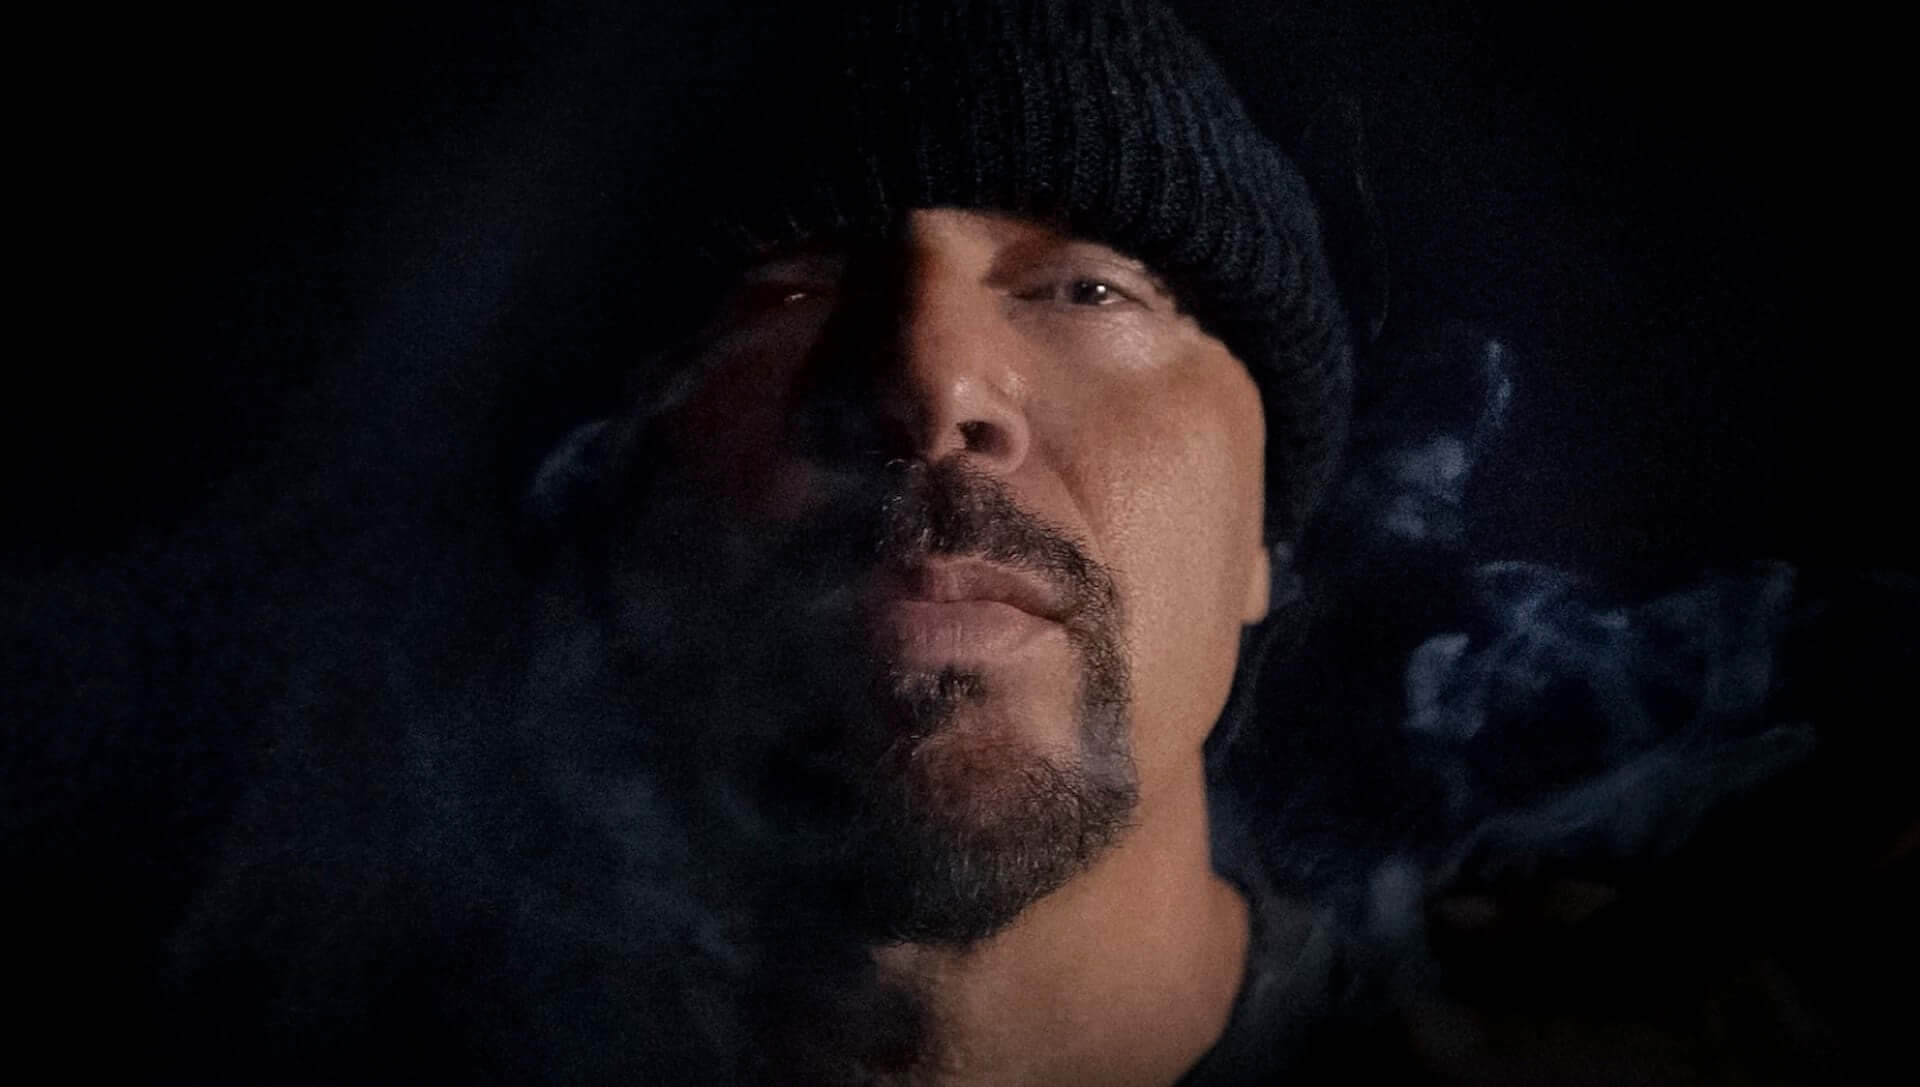 Cypress Hillの主要プロデューサー・DJ Muggsが新作『Dies Occidendum』をリリース決定！収録曲“The Chosen One”が公開 music210122_djmuggs_2-1920x1087